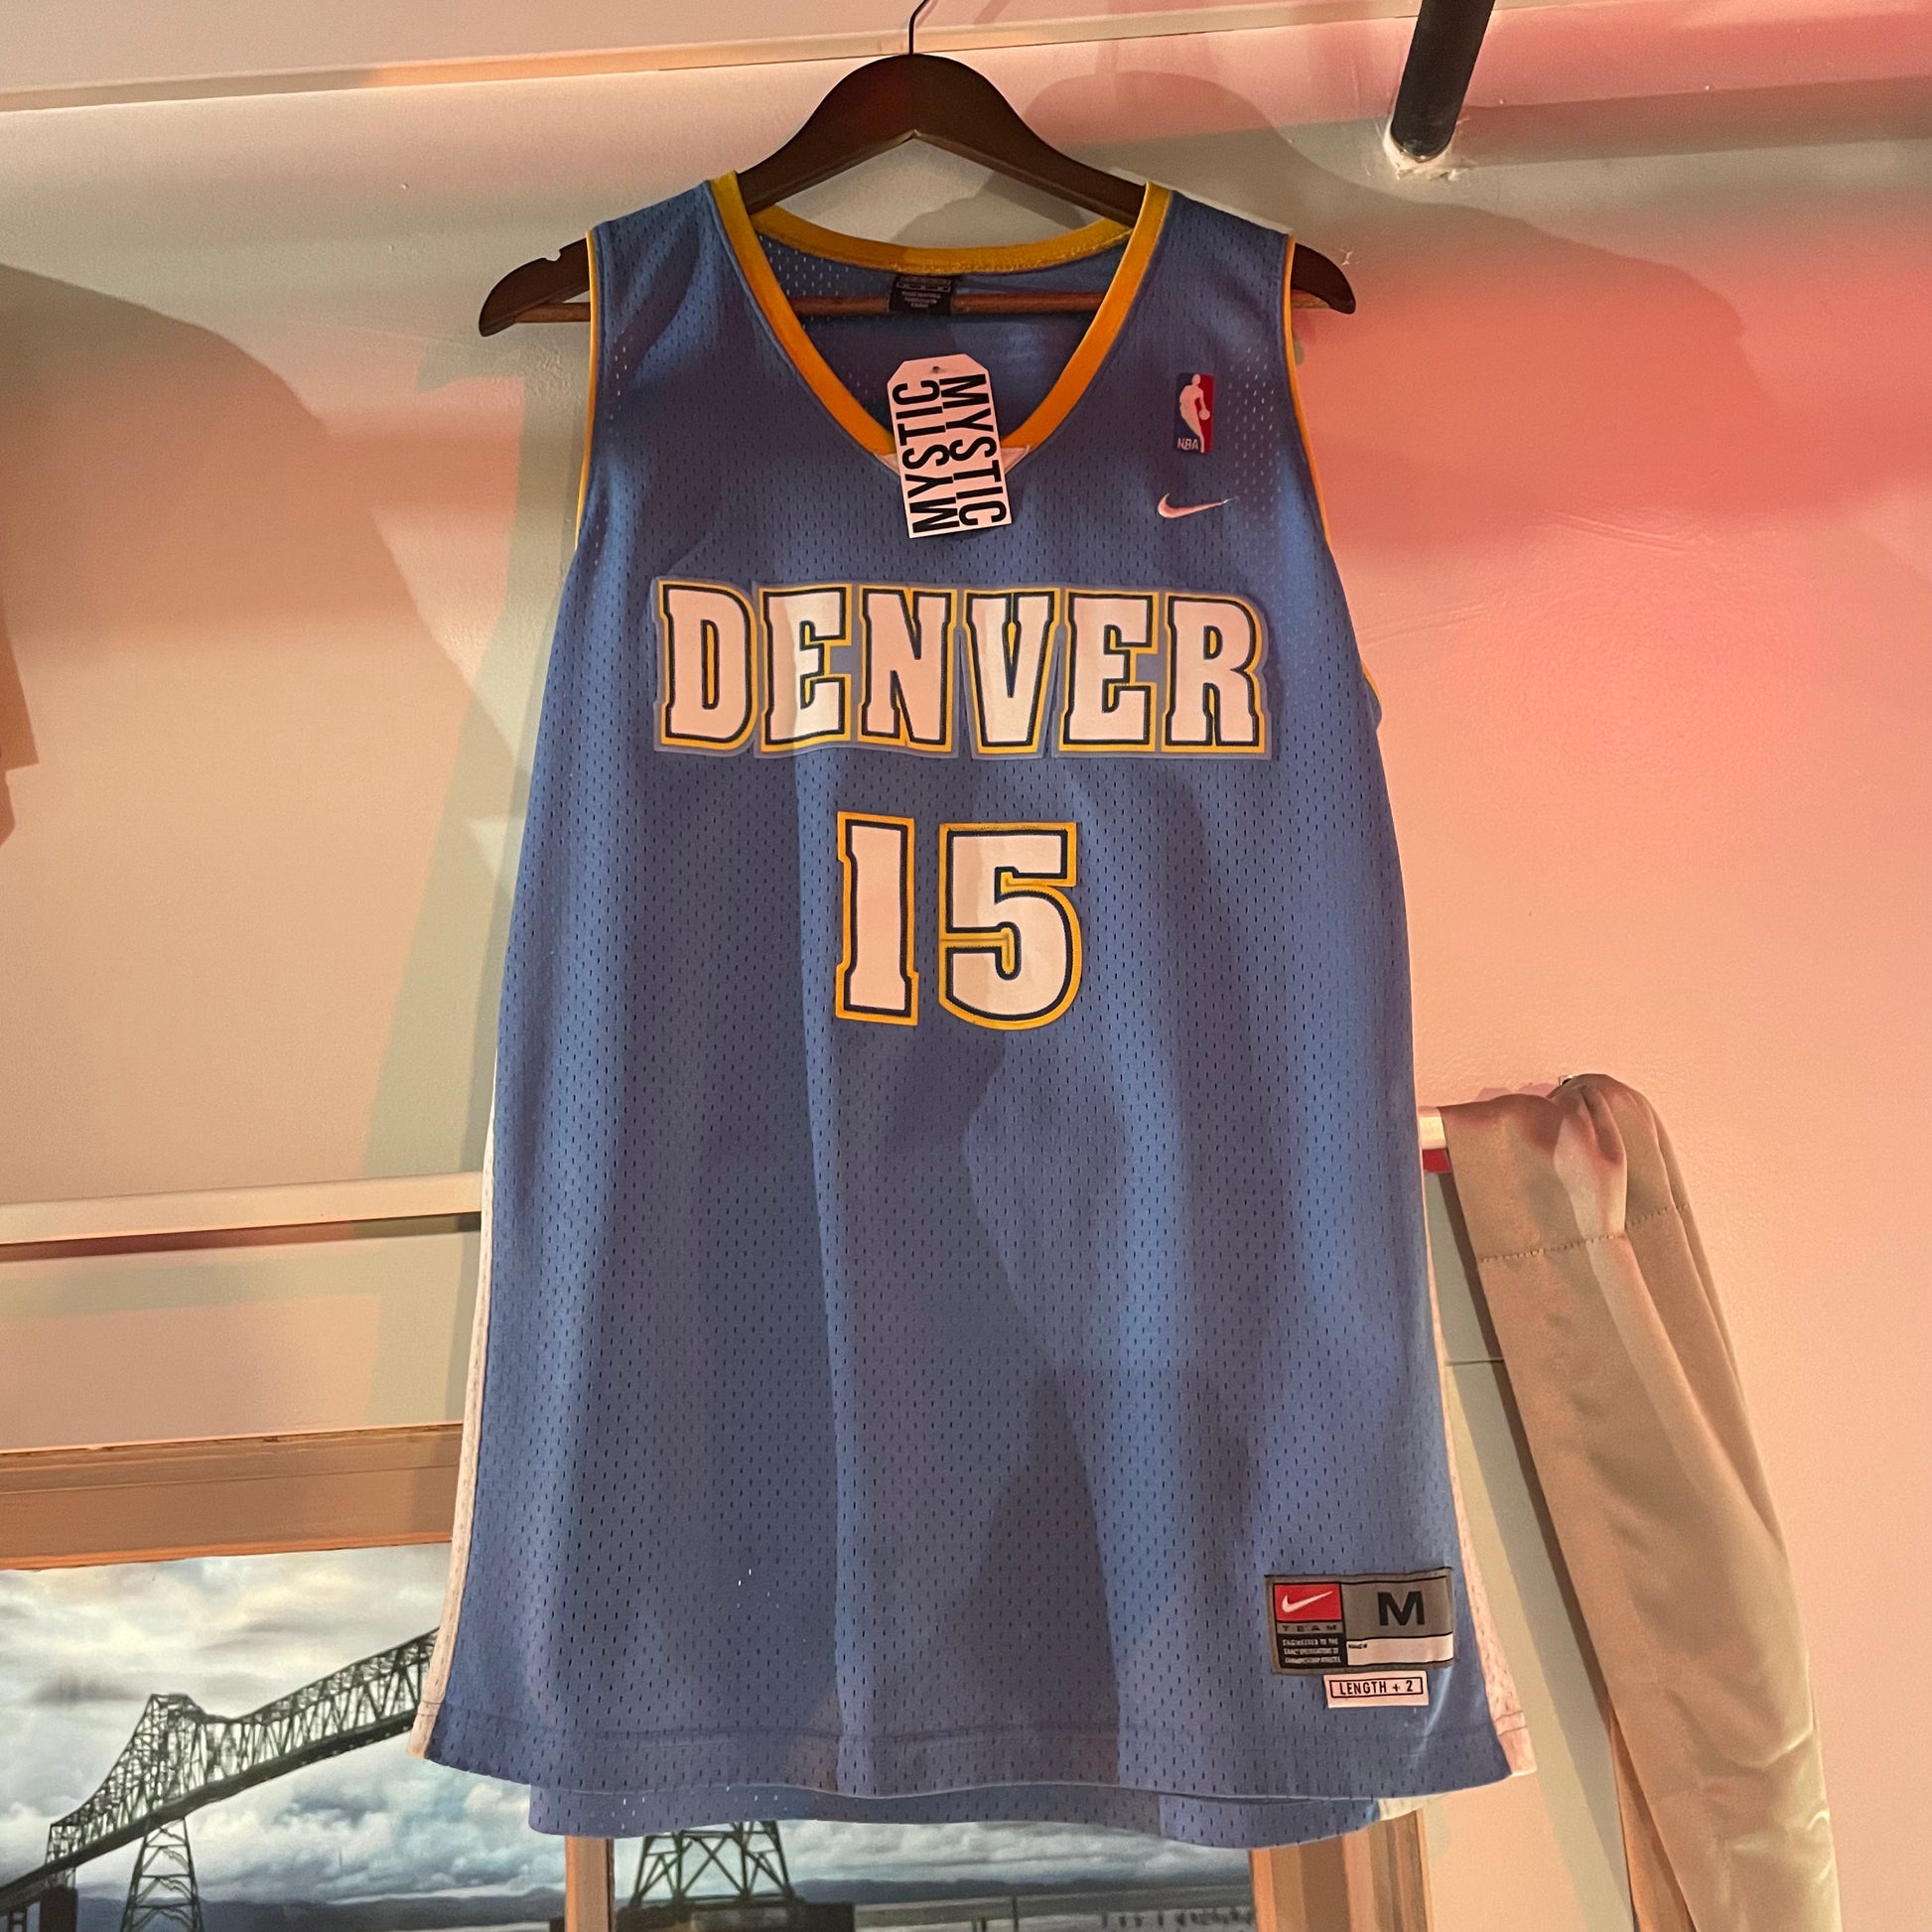 Nike Carmelo Anthony Denver Nuggets throwback retro jersey